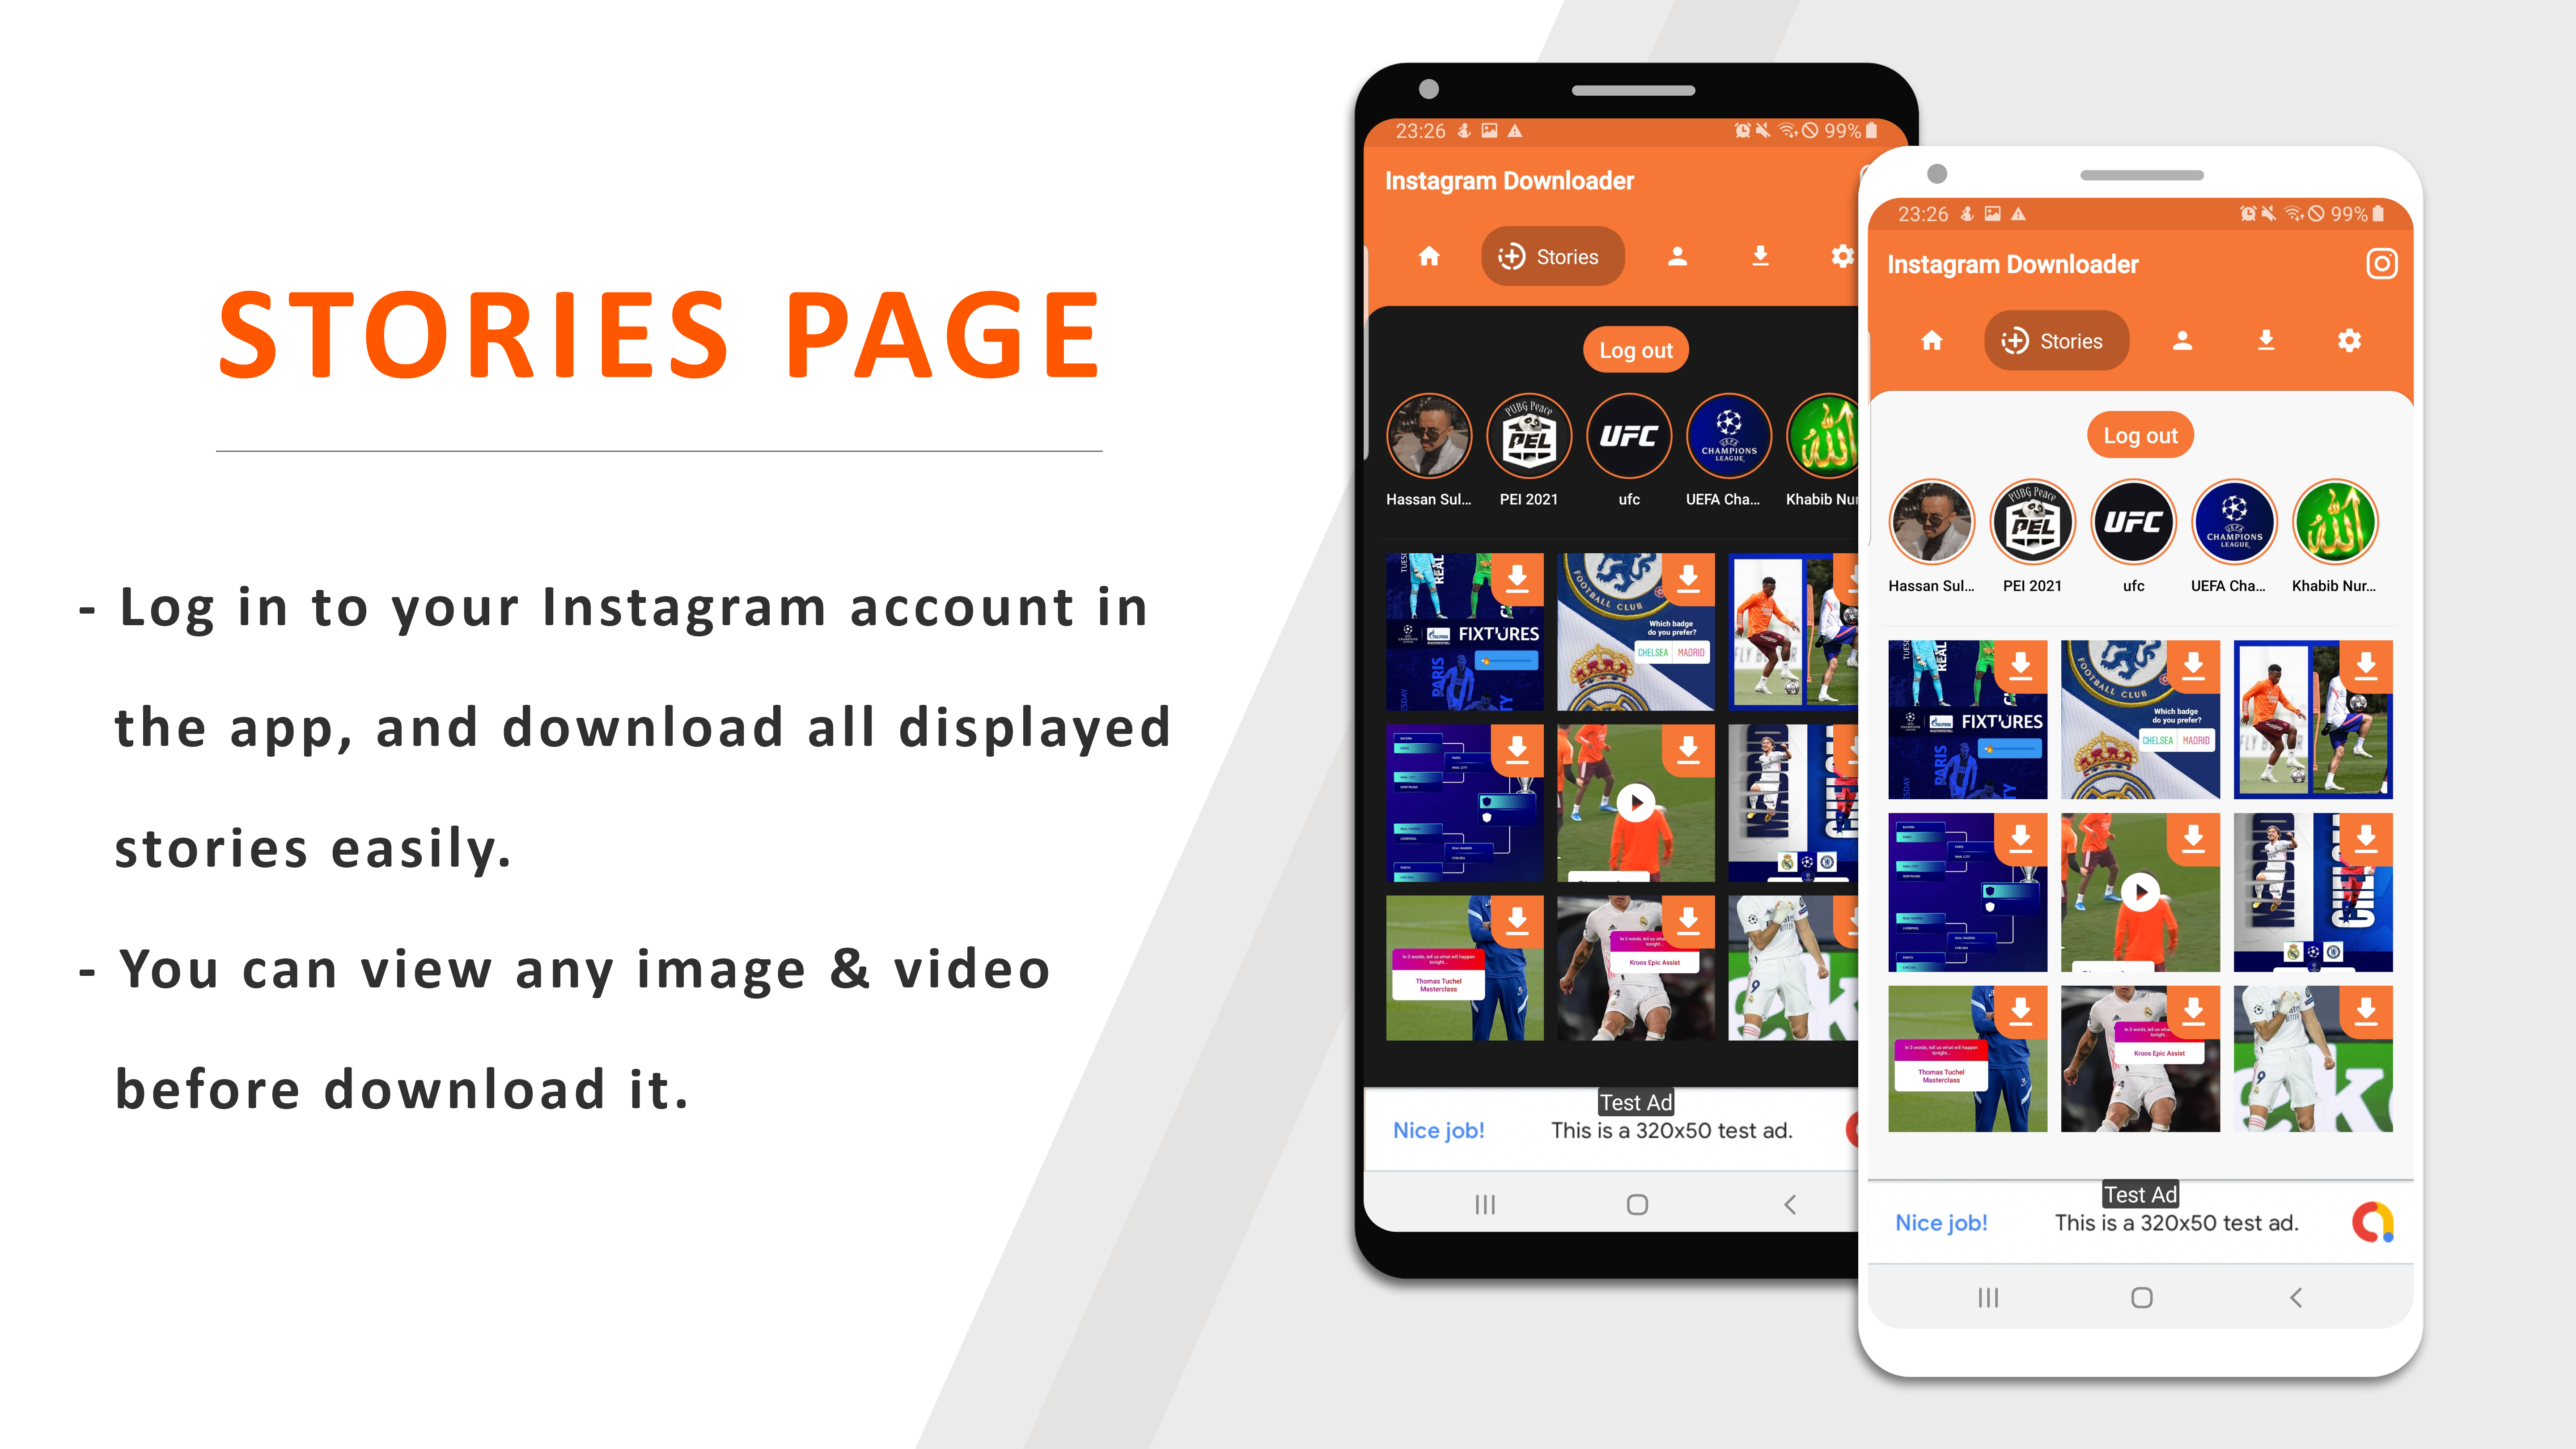 Instagram Downloader - Videos, Photos, Stories, Reels, ITGV - All In One Instagram Downloader App - 6